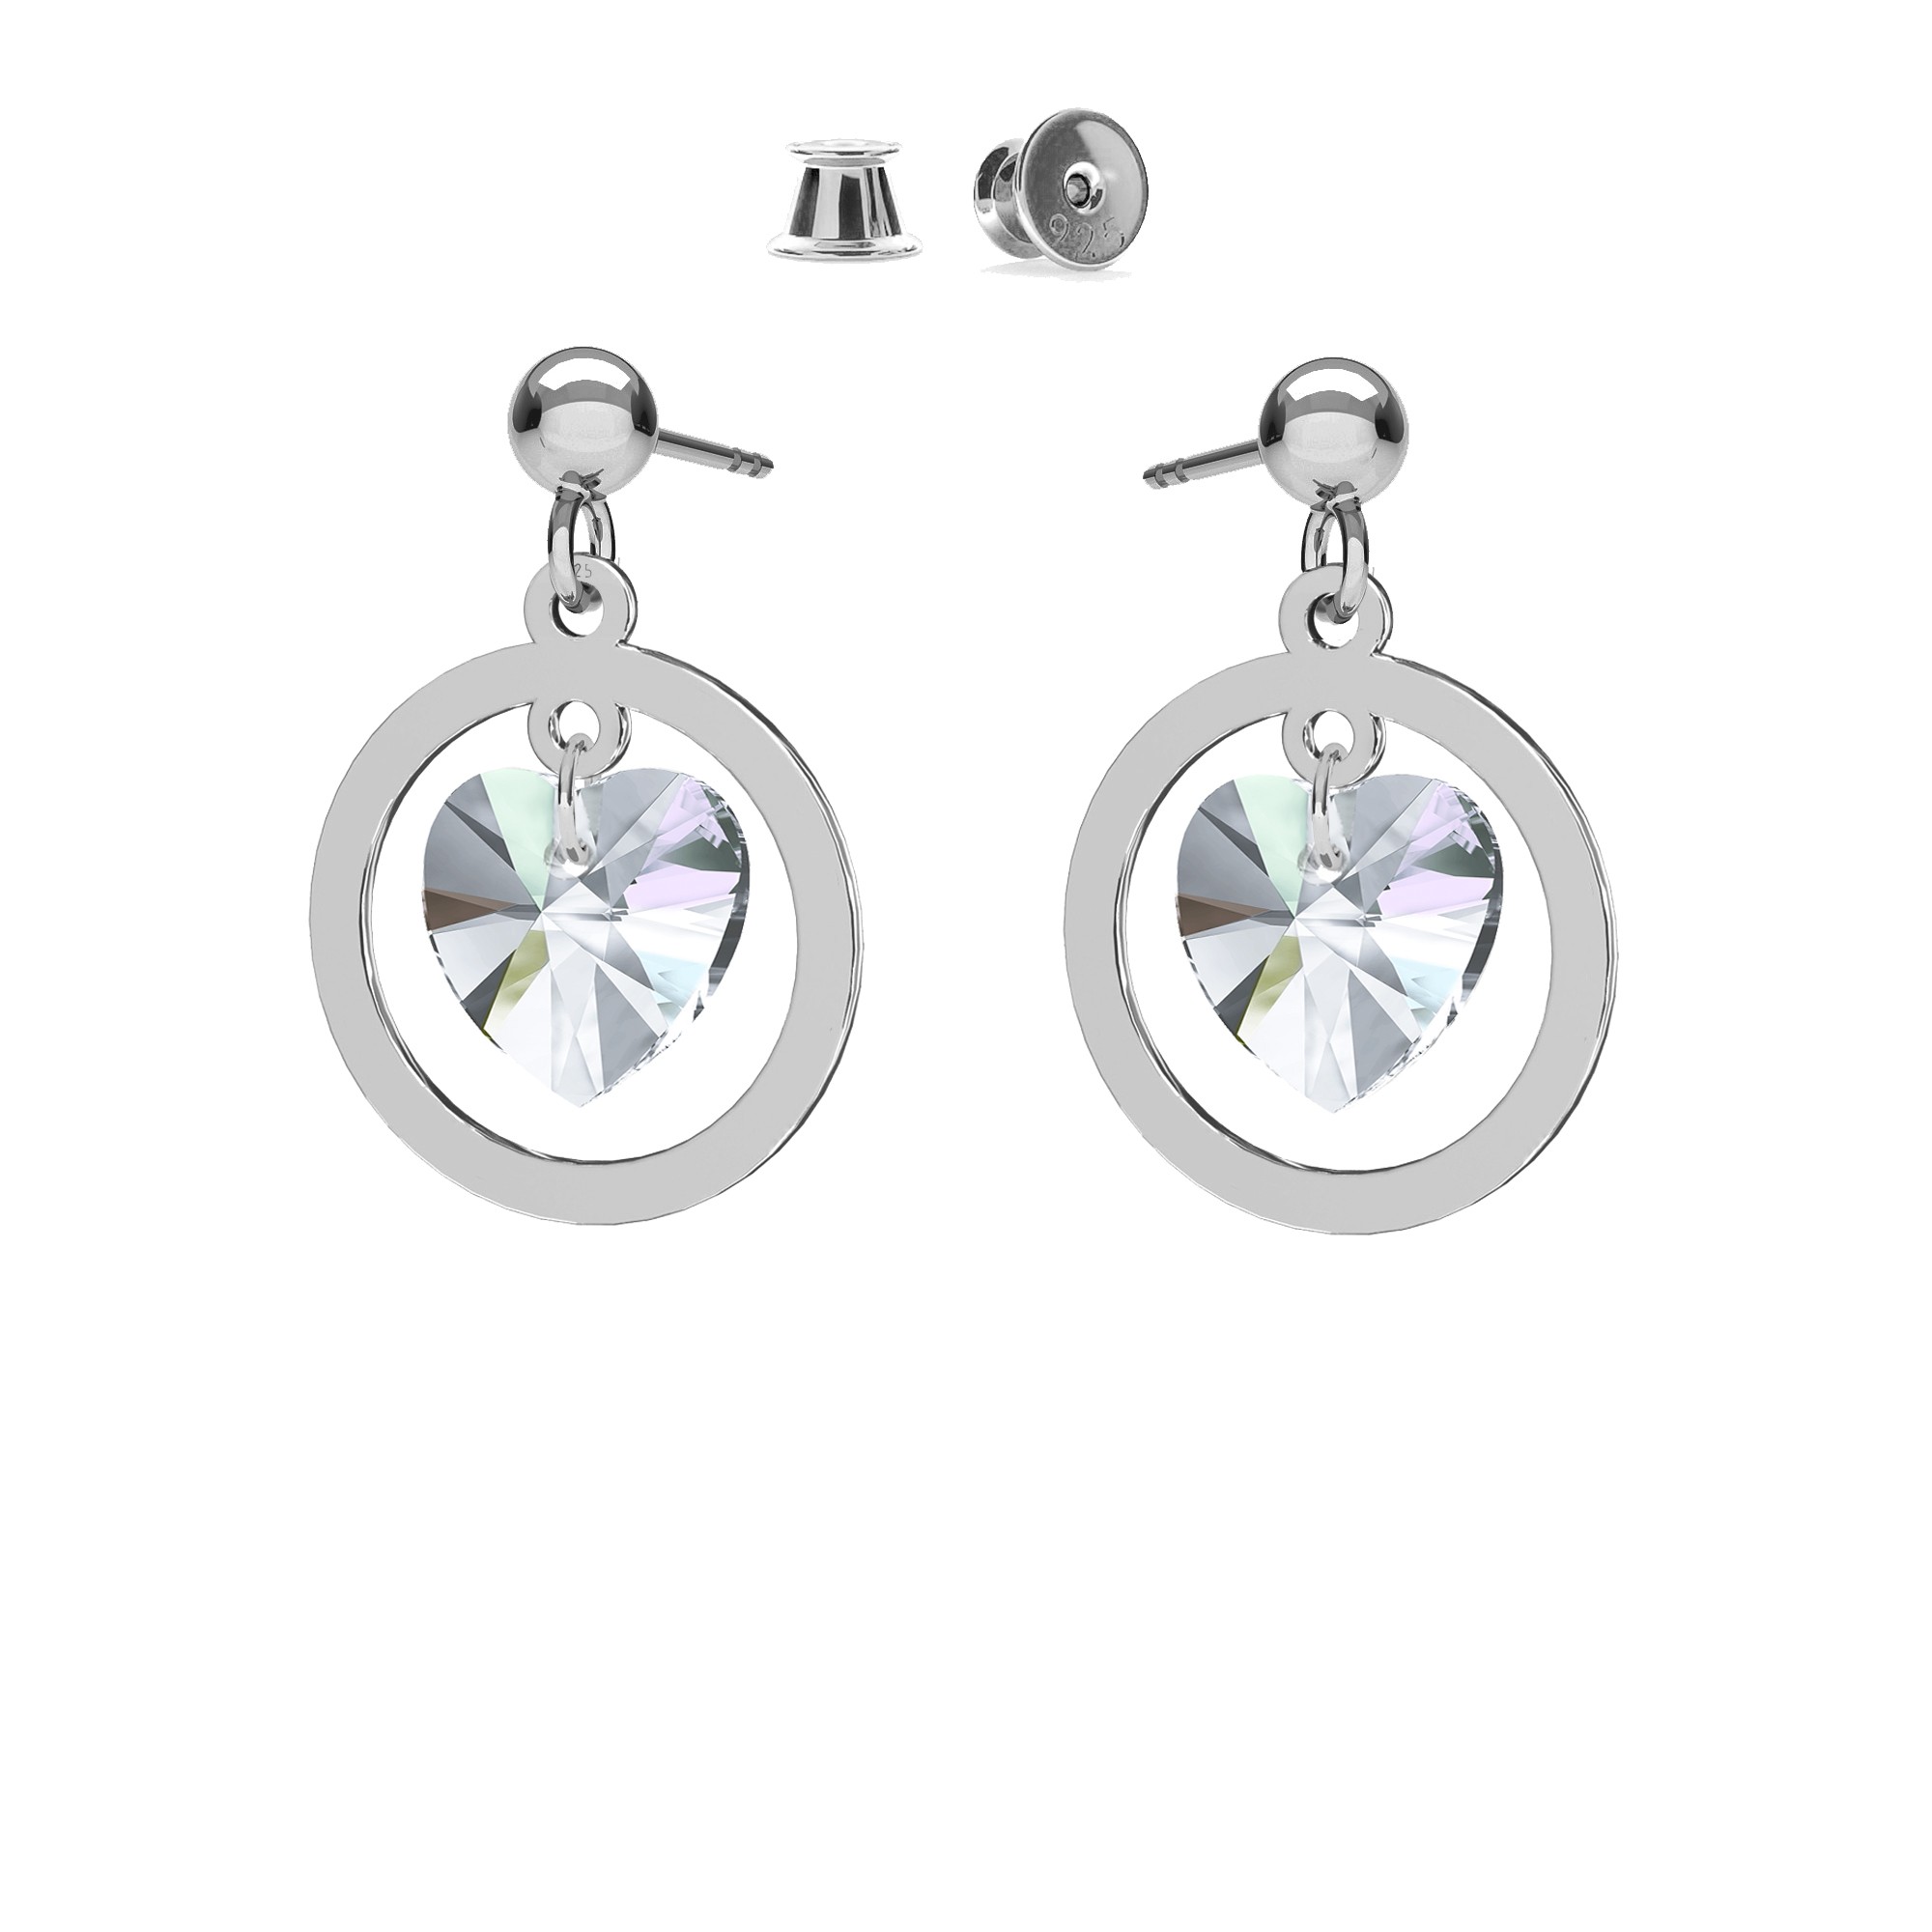 Swarovski crystal drop earrings T°ra'vel'' , silver 925